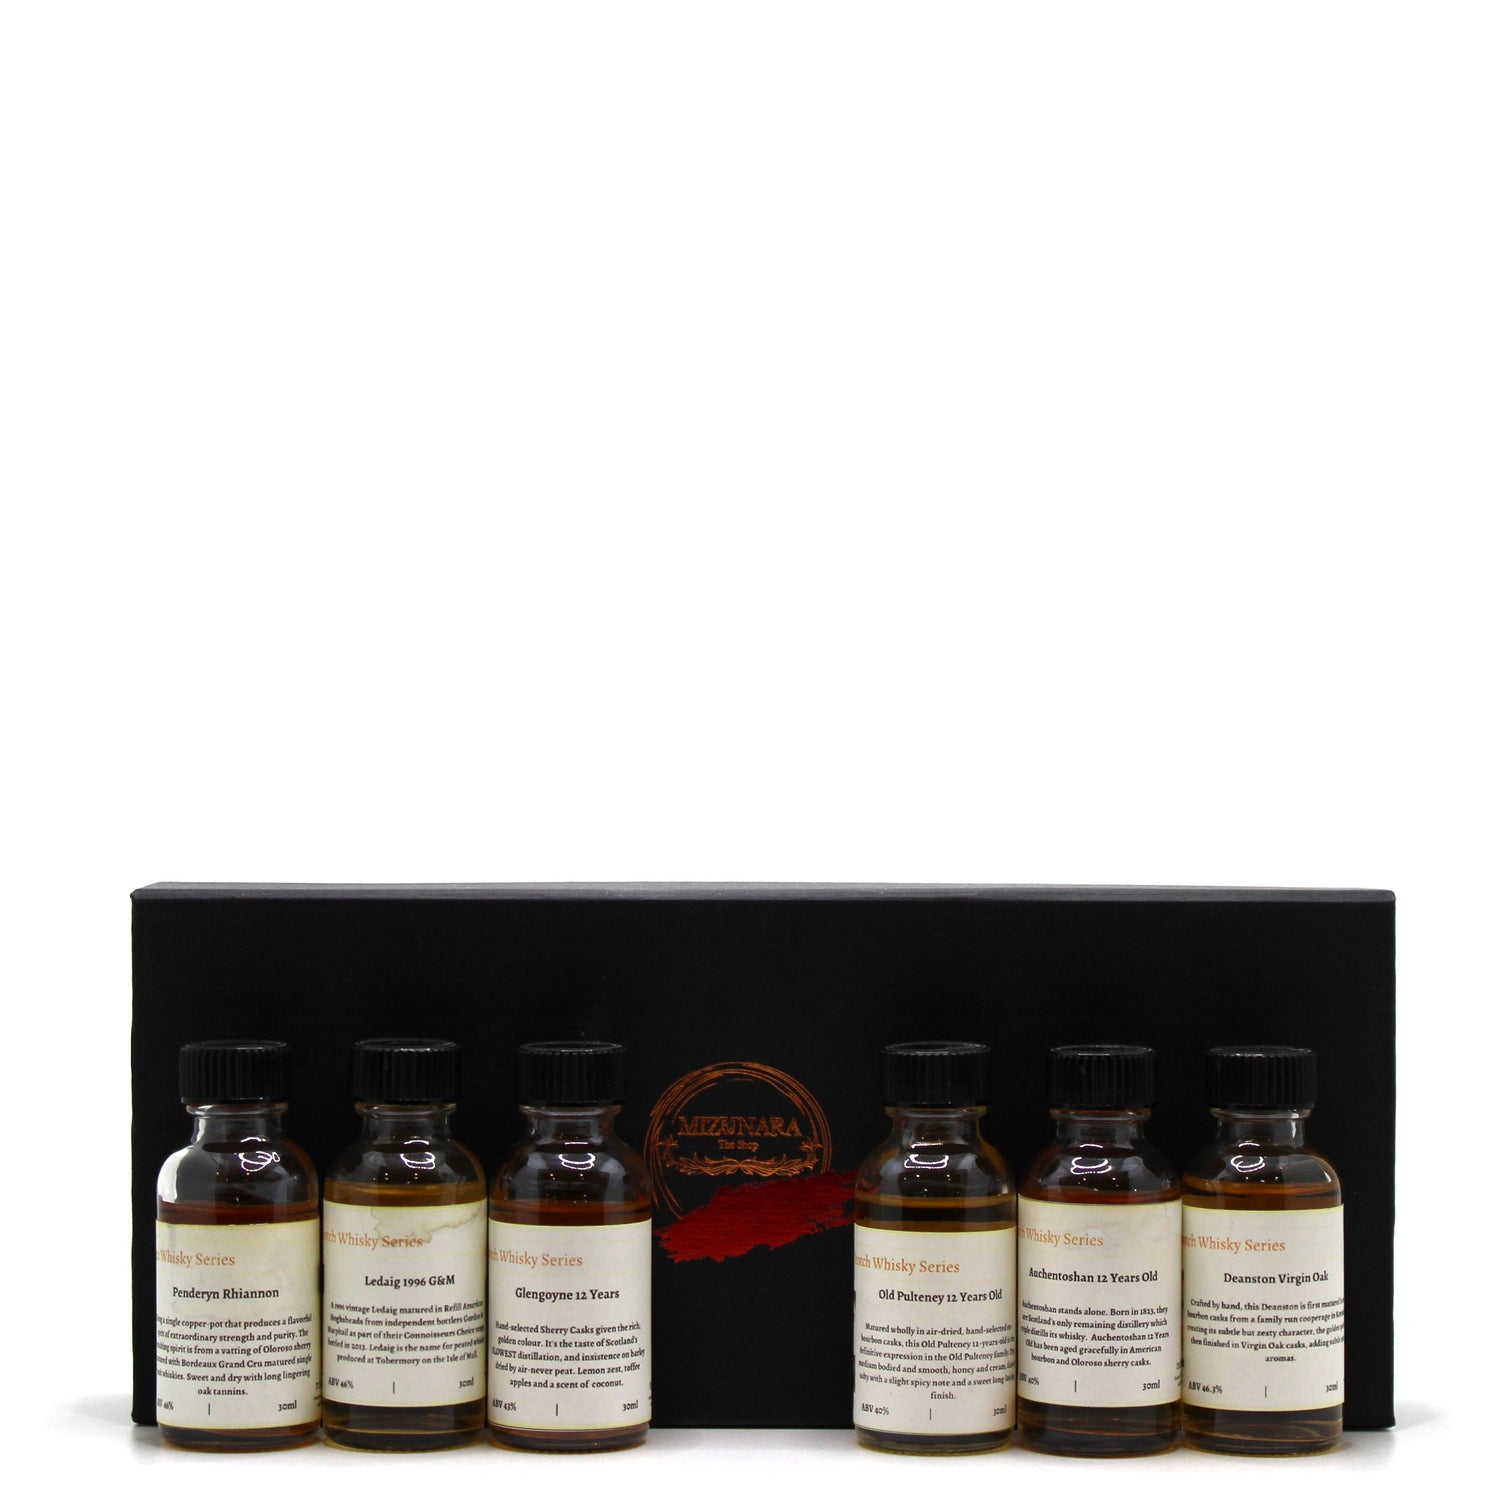 Mixed Scotch & Welsh Single Malt Whisky (6 x 30 ml) Tasting Set with Gift Box